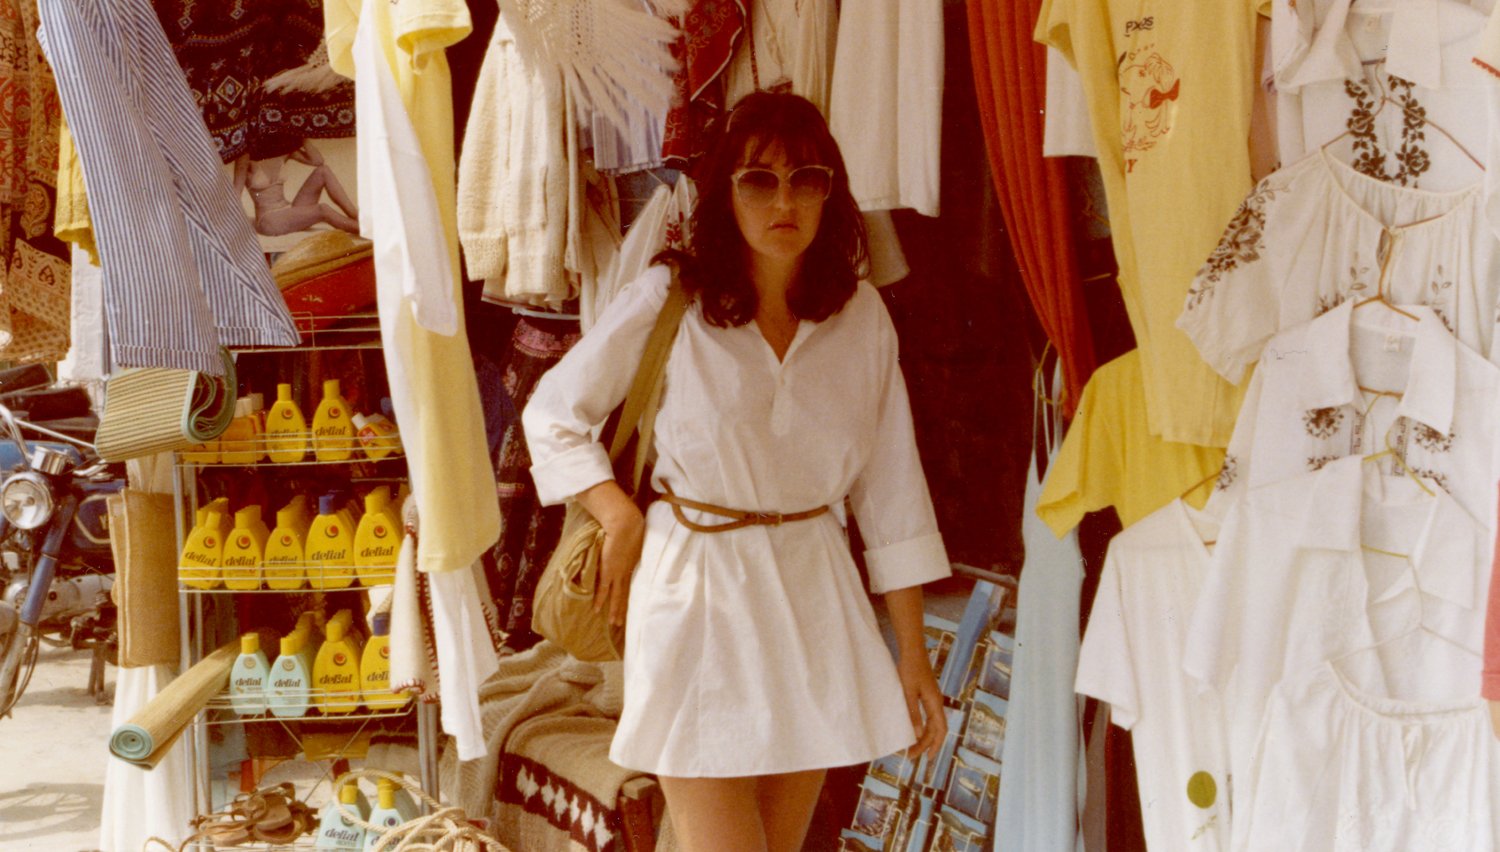 Chrissy Nason visiting Corfu in 1982. She looks amazing!